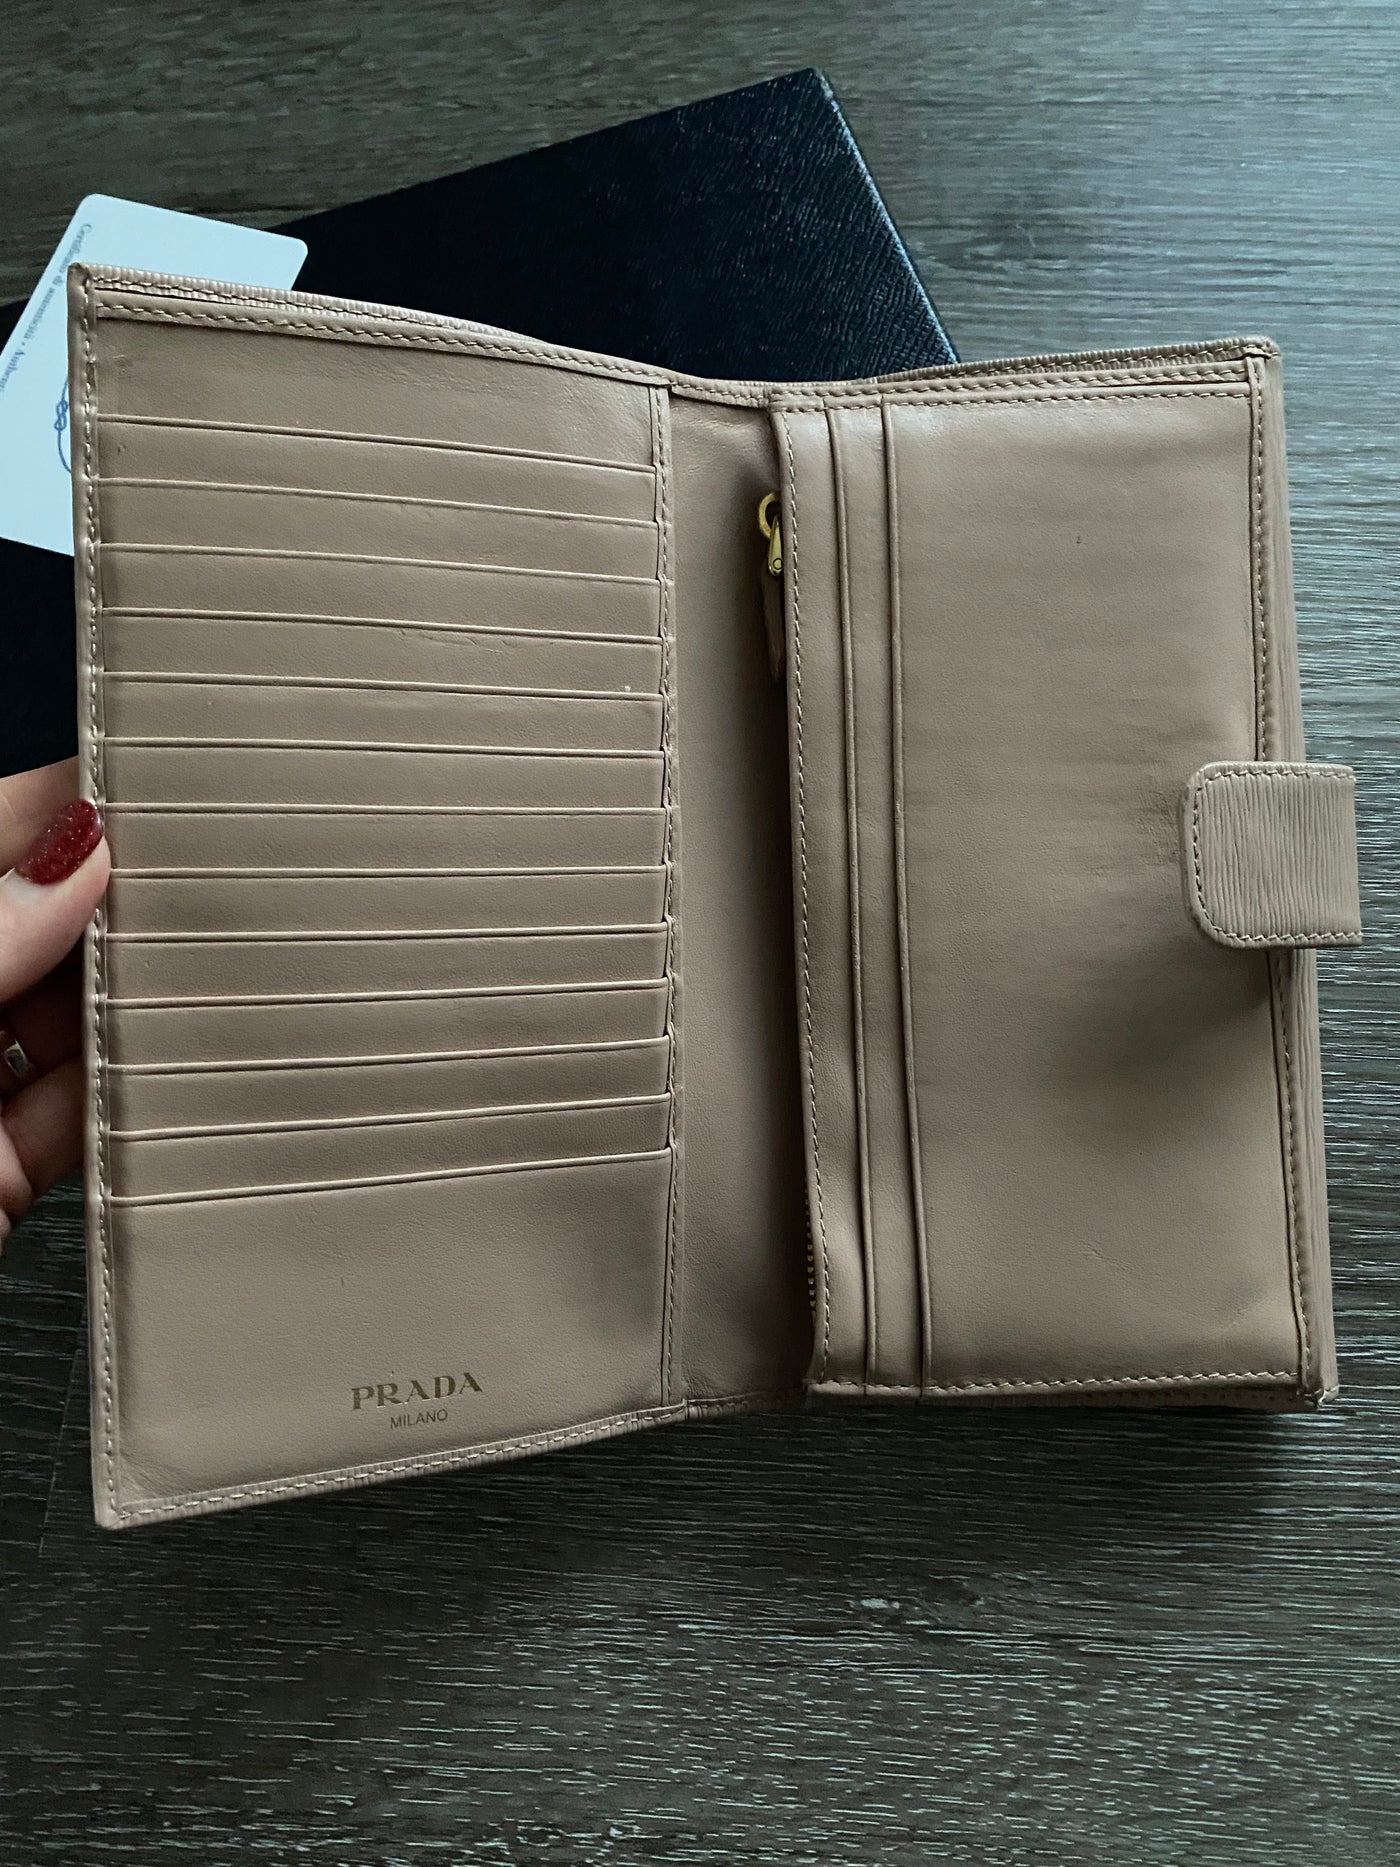 Prada Patent Leather Full size Wallet / Travel Organizer w/ box - tan (B+) *Final Sale*